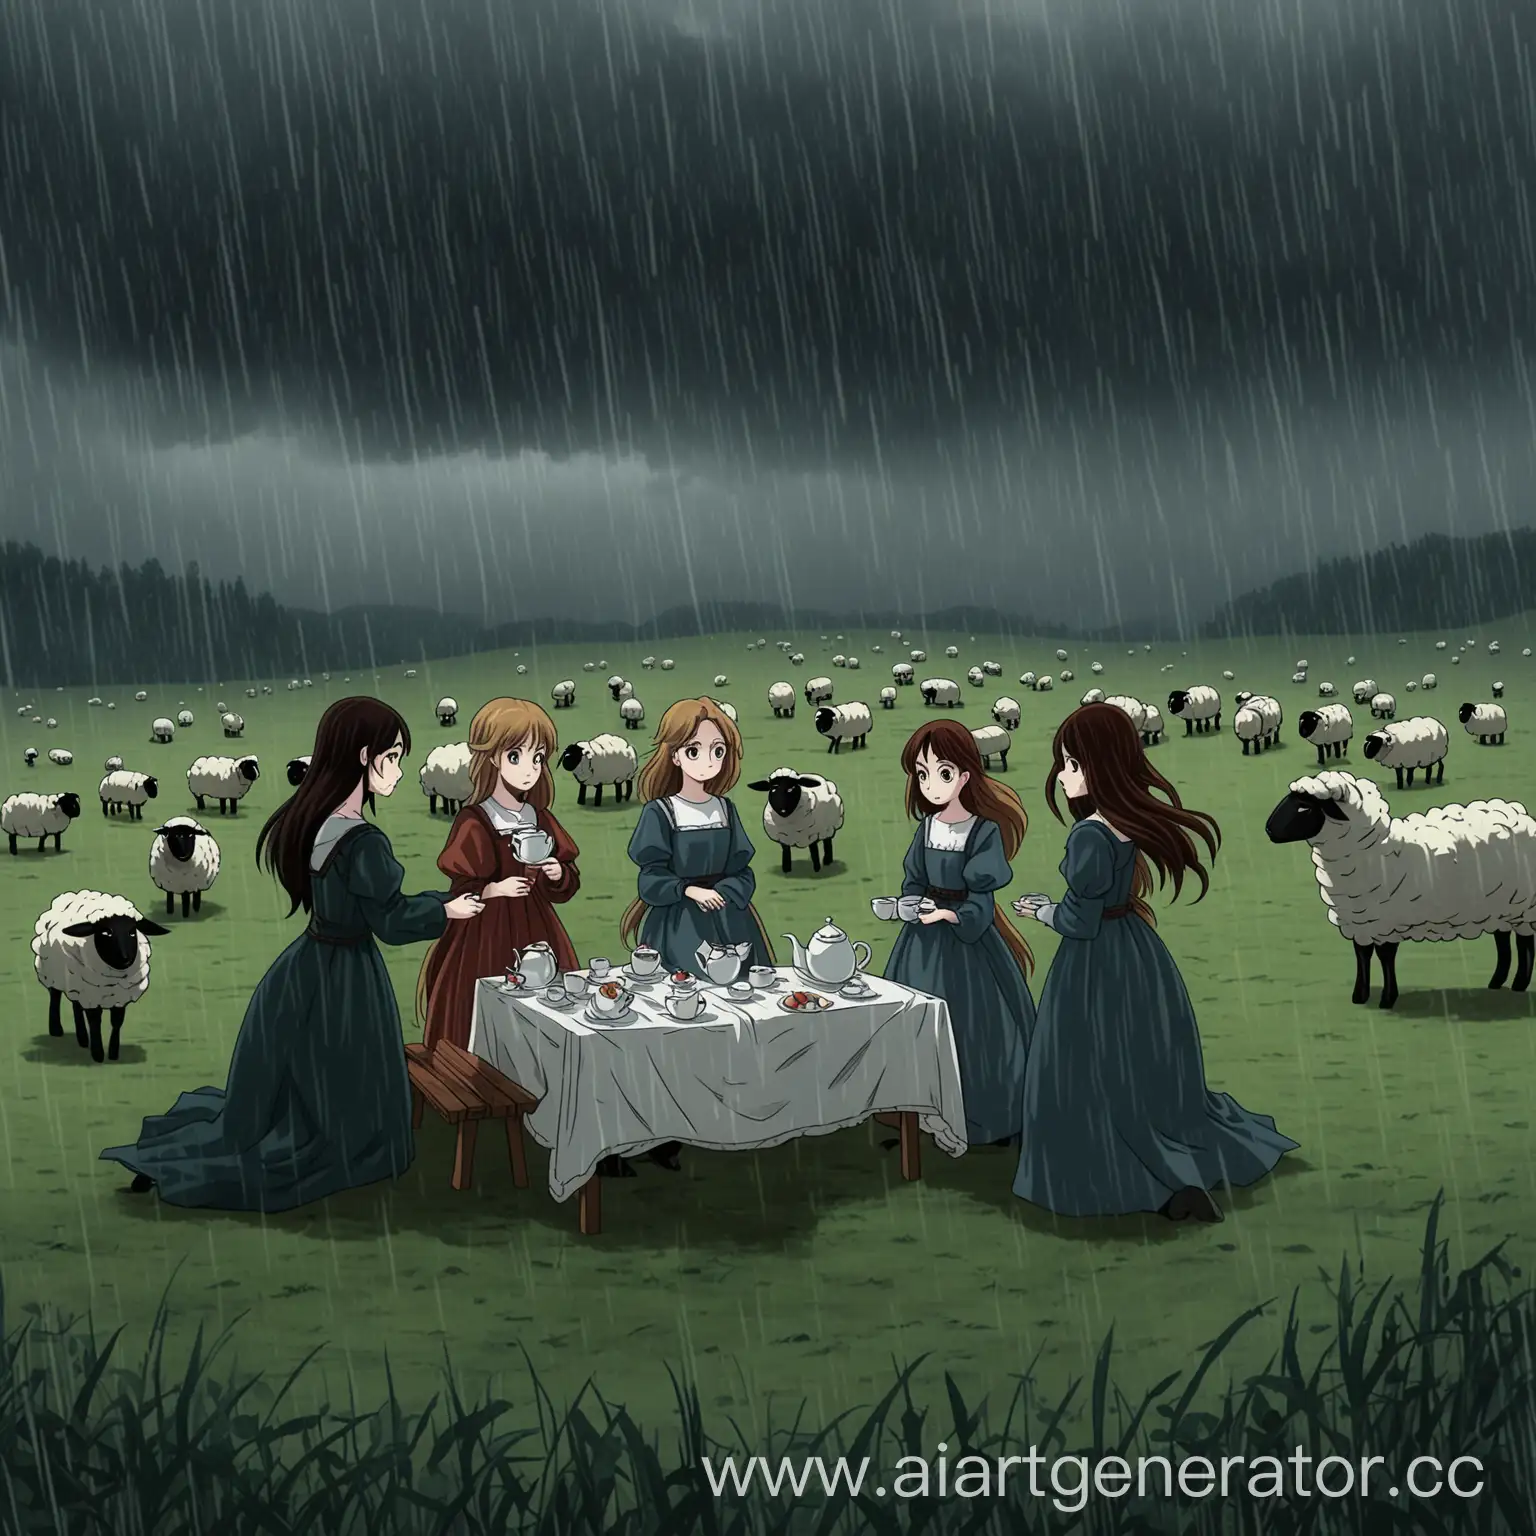  five girl on the big field, anime art, 2d art, tea party, picnic, sheeps, many sheeps, windy weather, rainy, dark aesthetic, creepy vibes, beautiful medieval dress, anime art, ghibli studio style